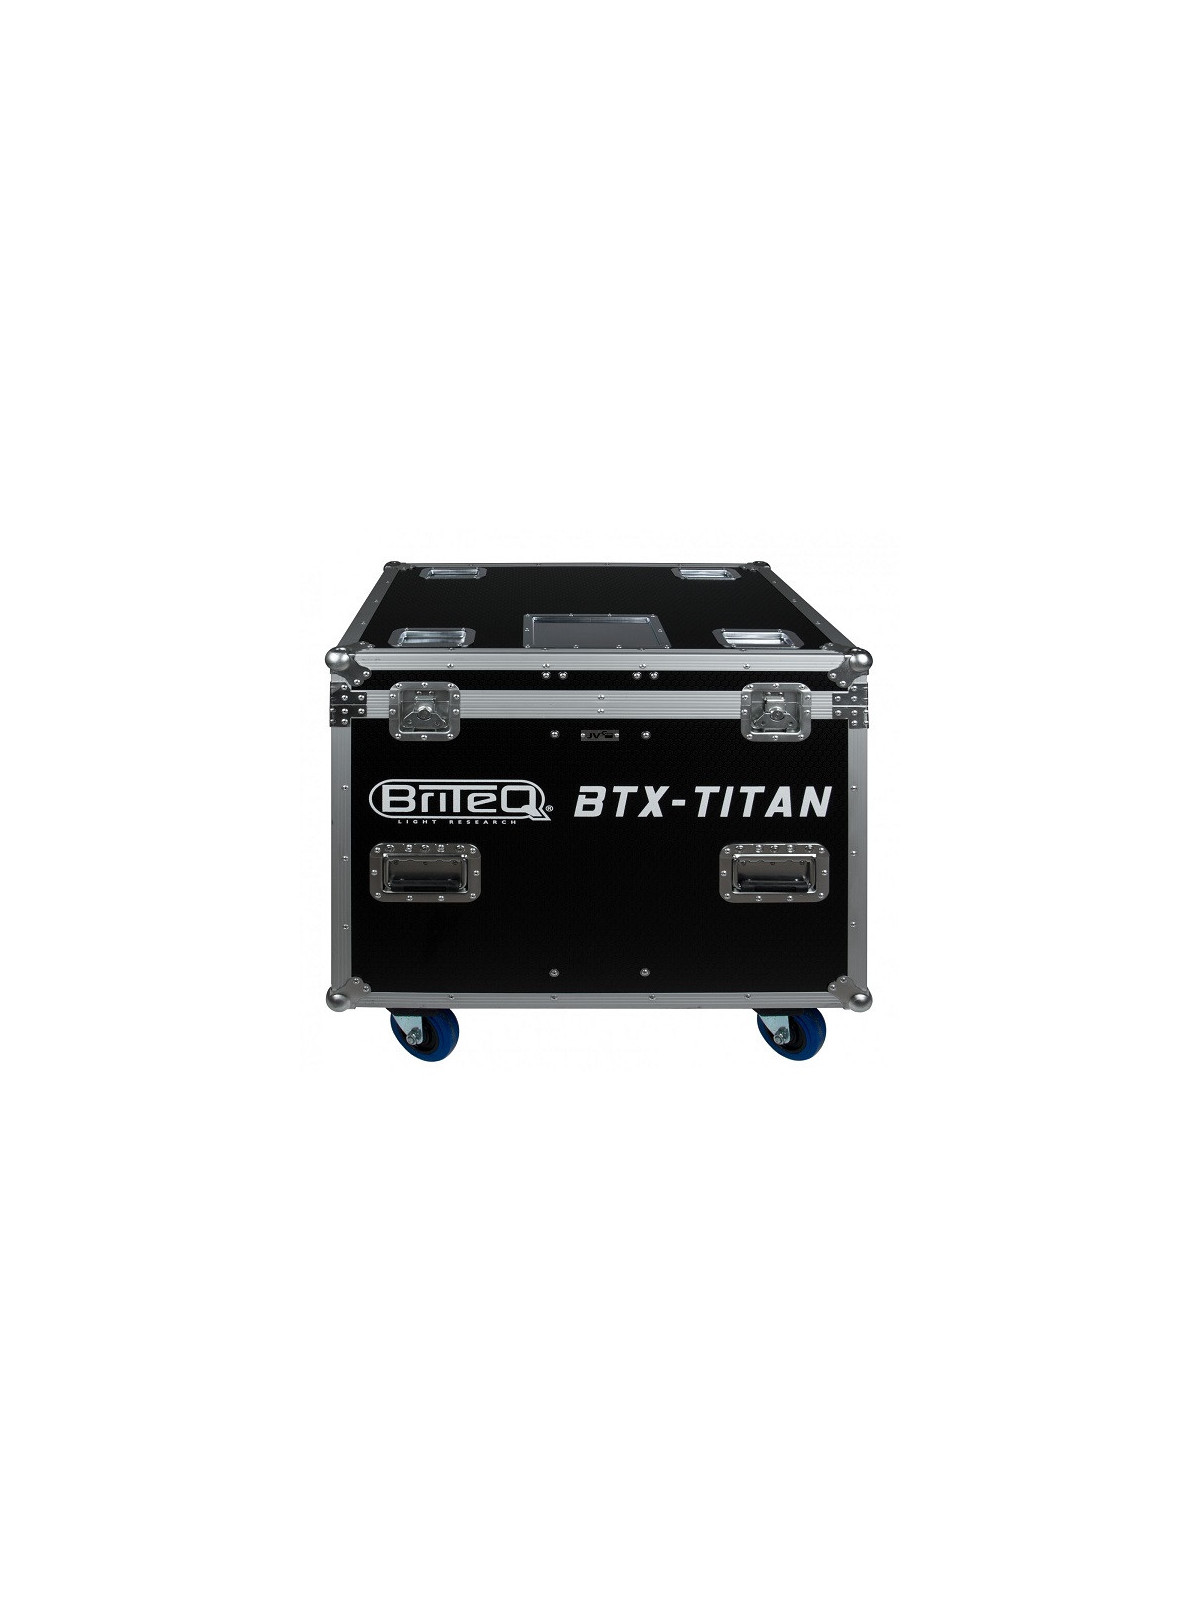 Briteq CASE FOR 2x BTX-TITAN